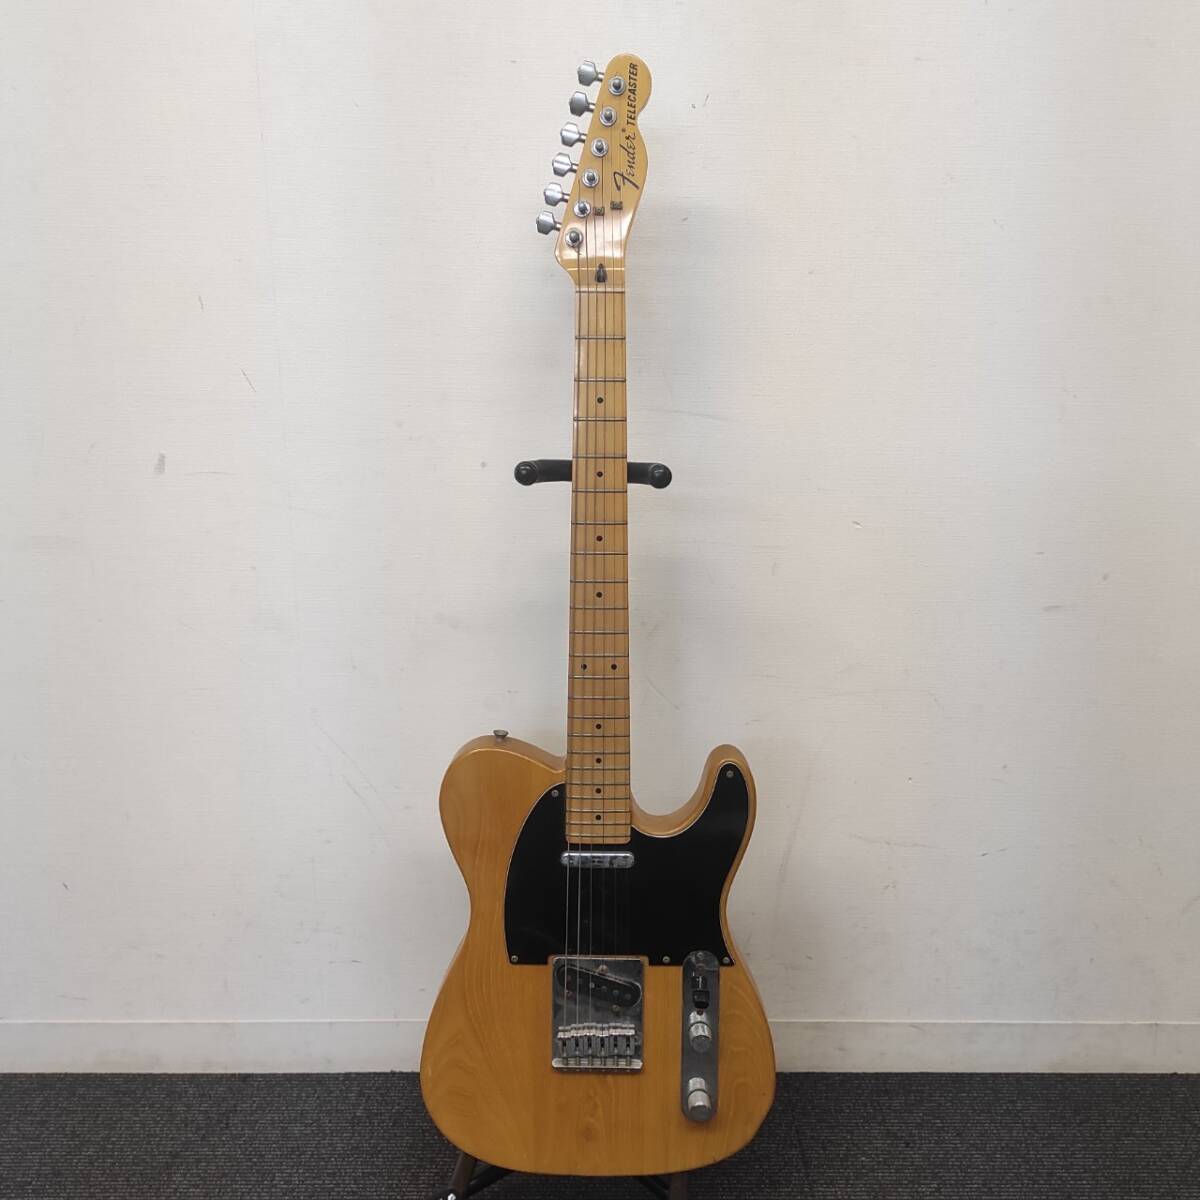 T631-K50-551 Fender Fender Telecaster Telecaster Electric Guitar Japan College/Debilt Detail